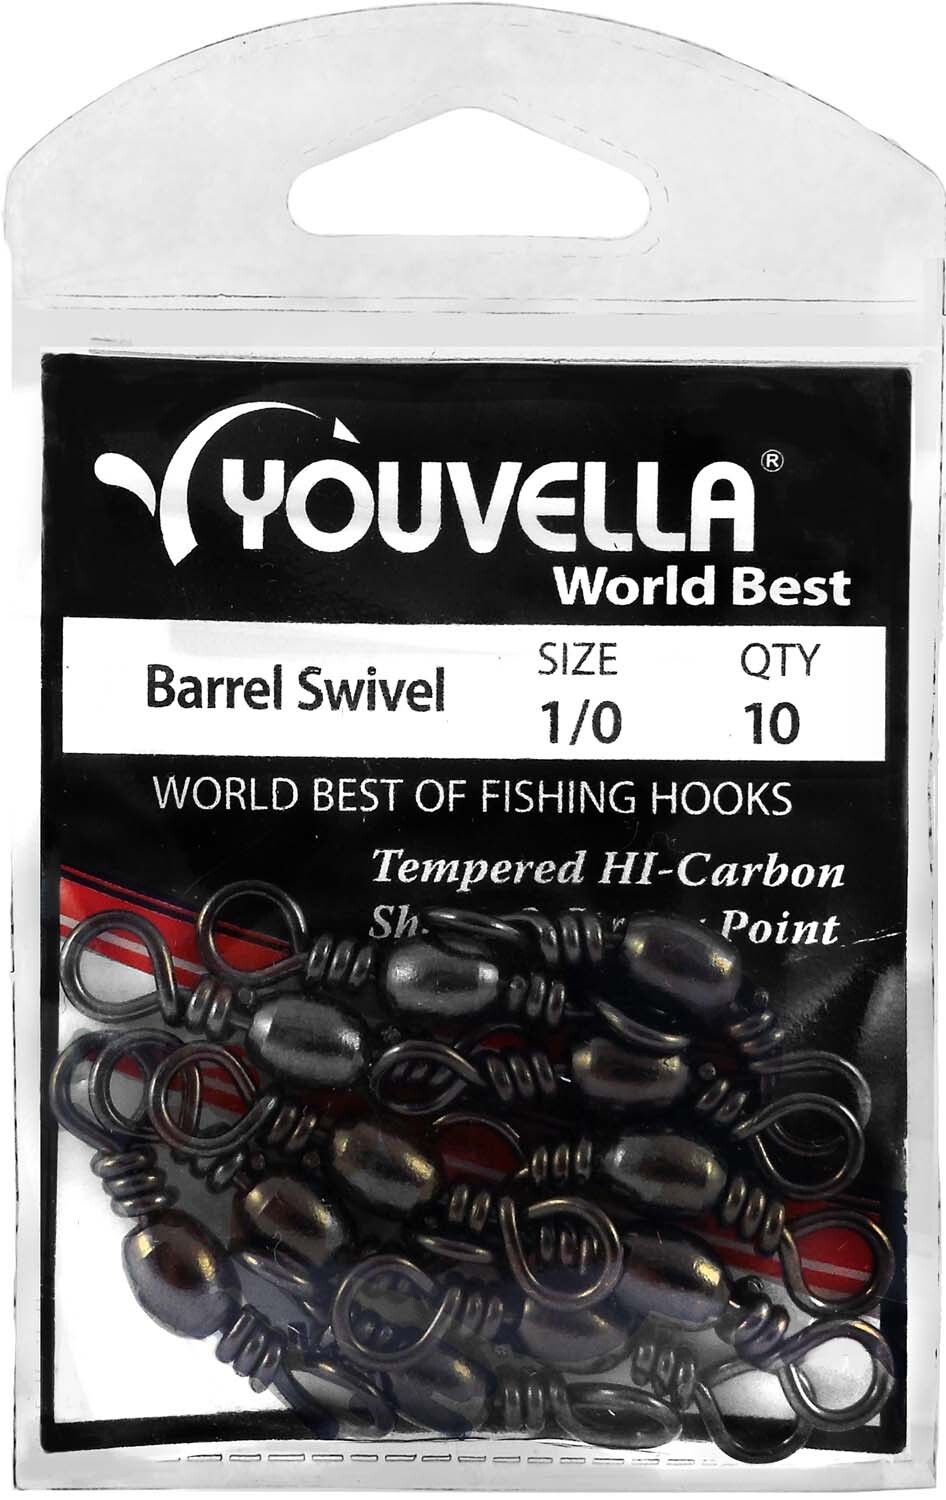 Barrel Swivel Pack - 1/0 (10 per pack) - Youvella